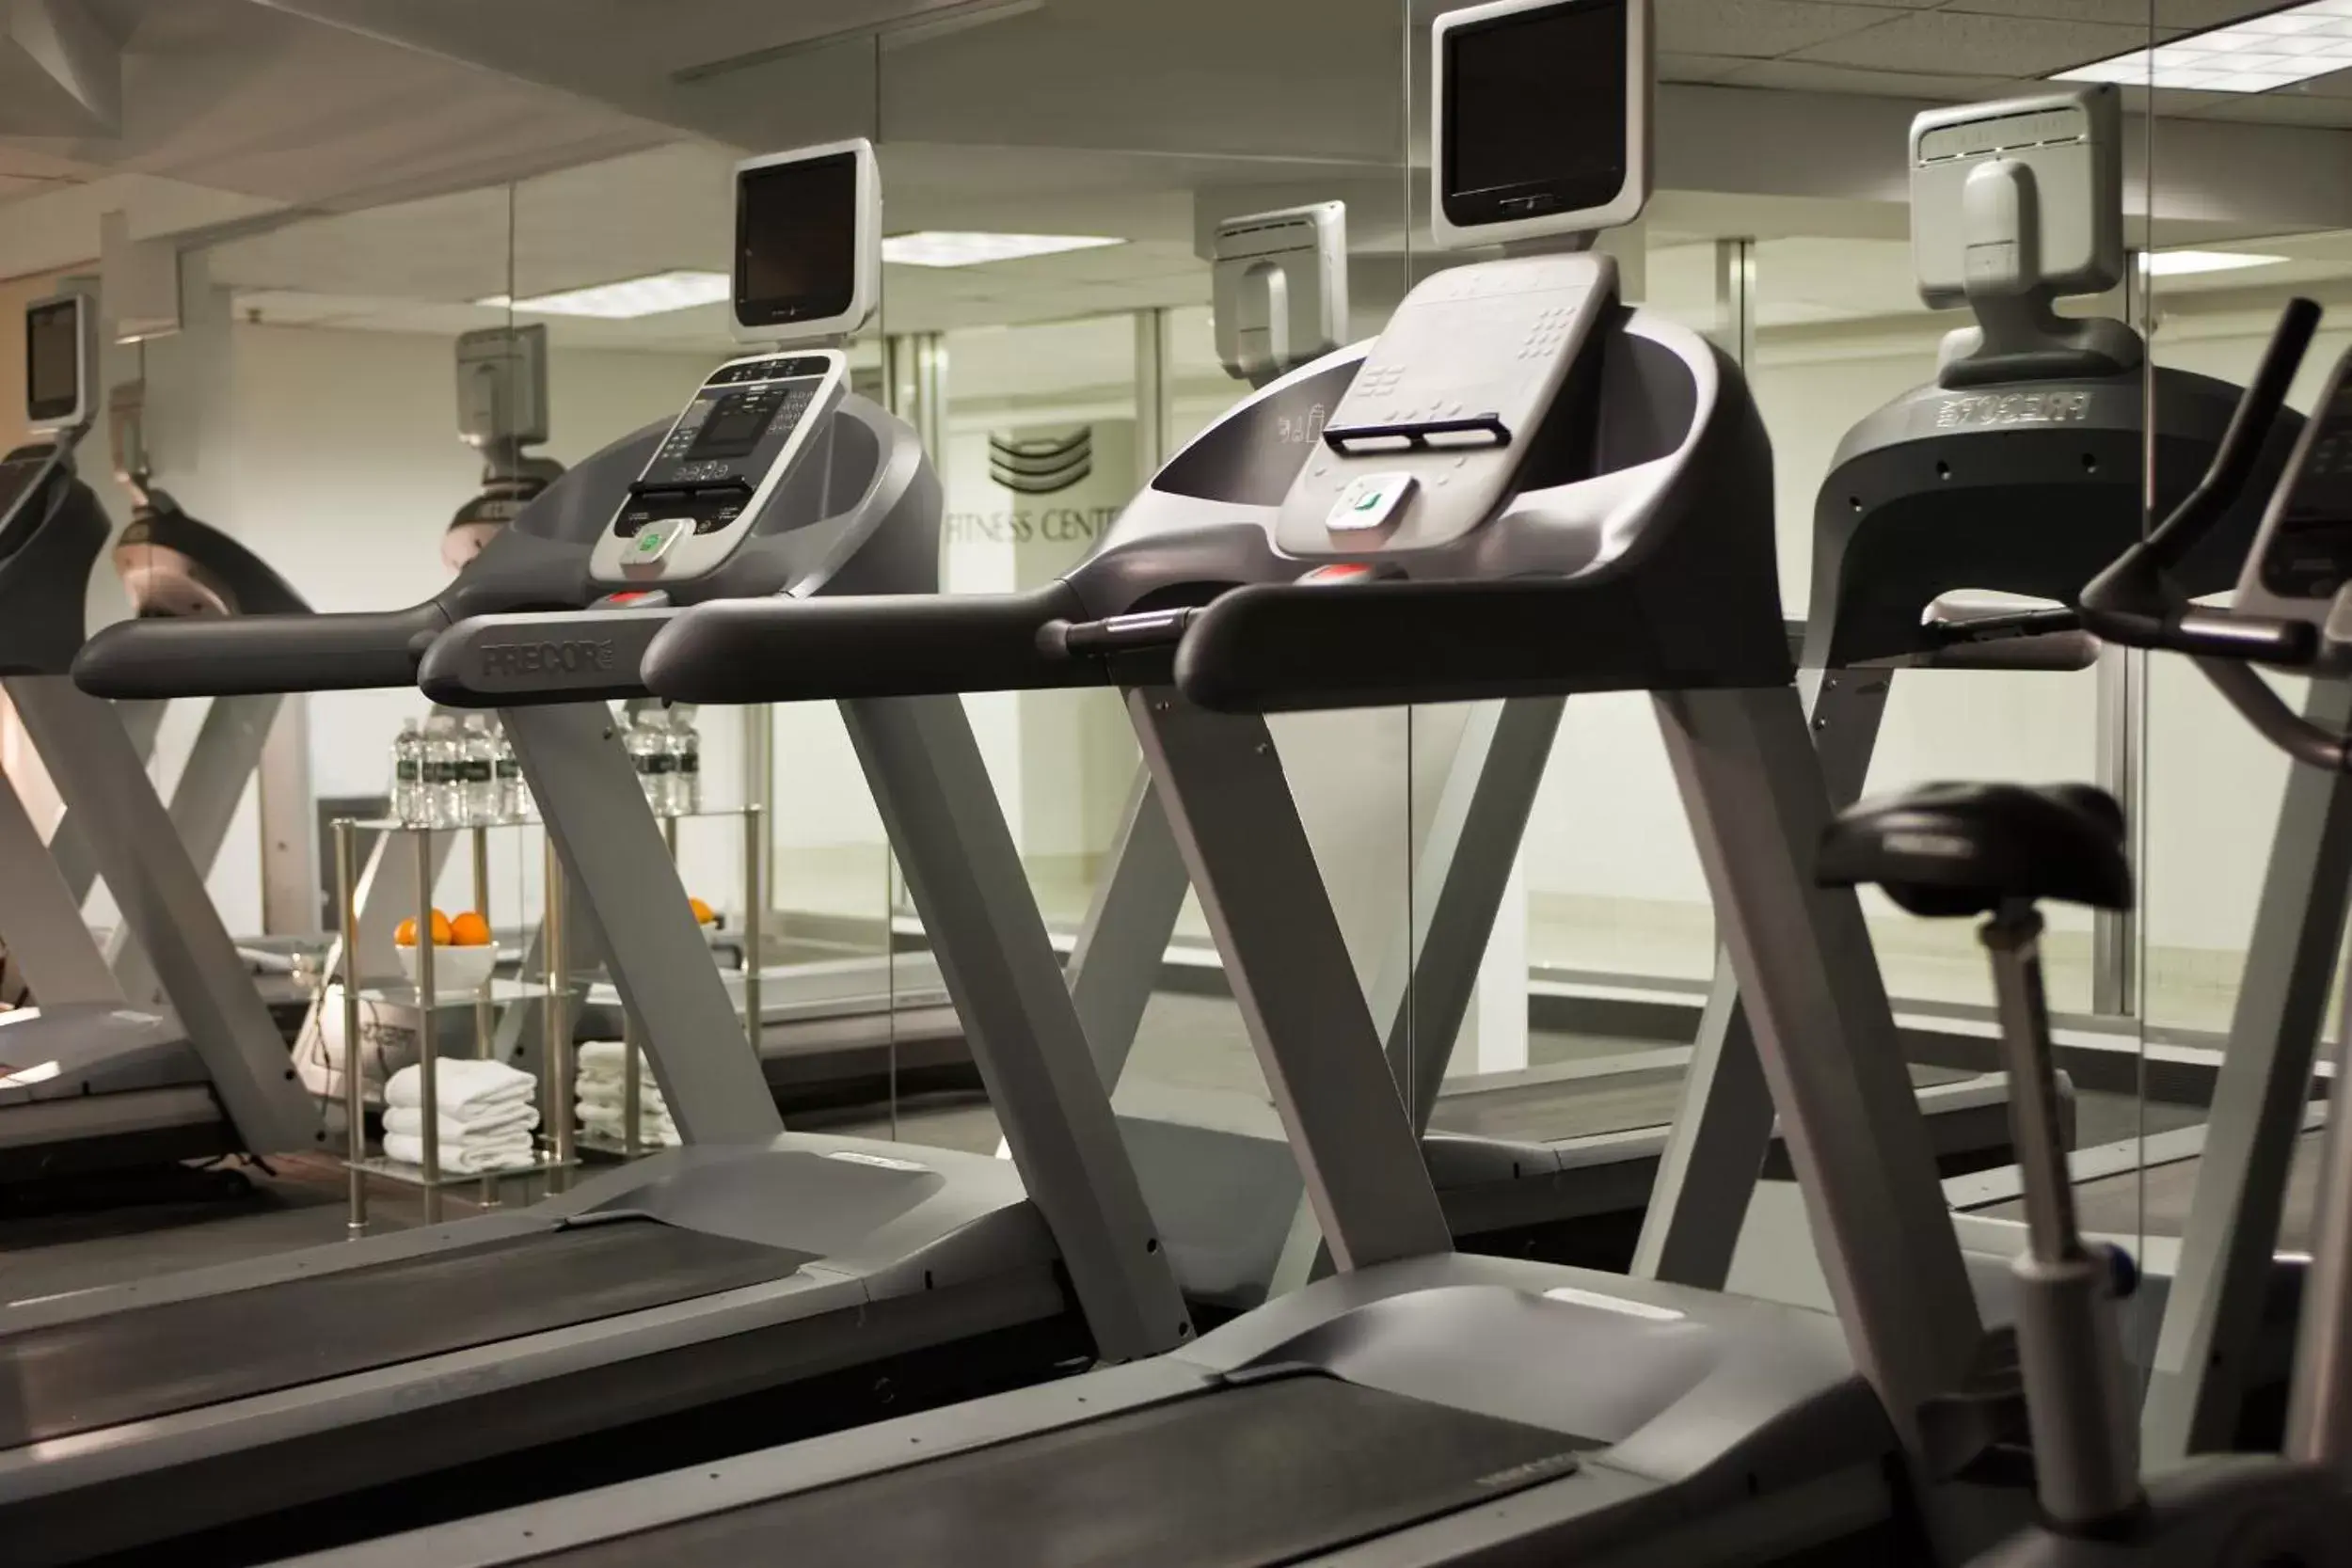 Fitness centre/facilities, Fitness Center/Facilities in Washington Plaza Hotel